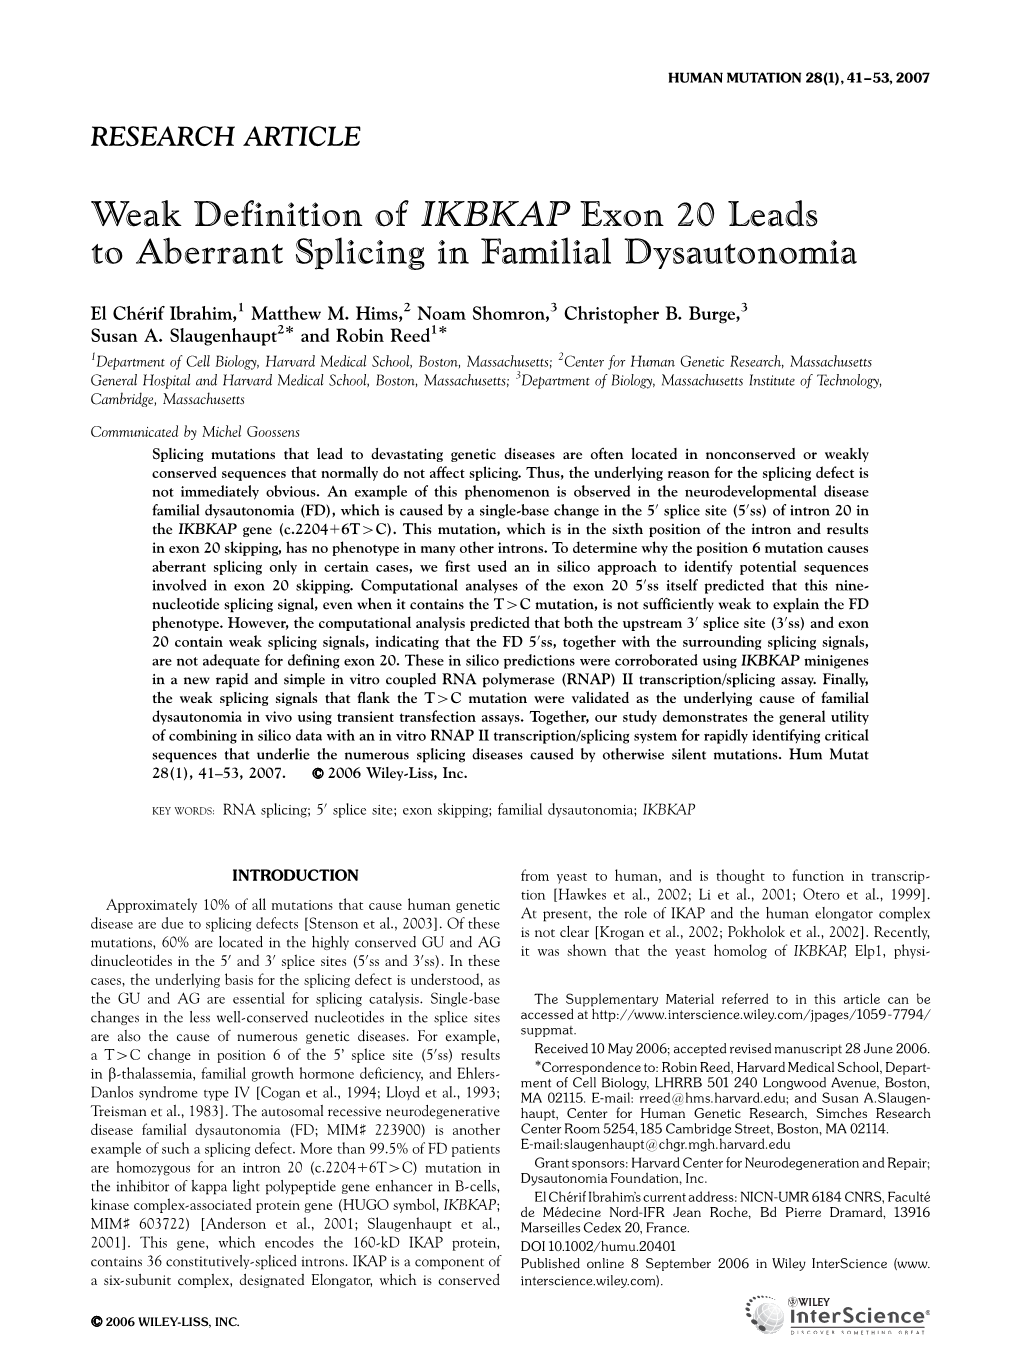 Weak Definition of IKBKAP Exon 20 Leads to Aberrant Splicing in Familial Dysautonomia